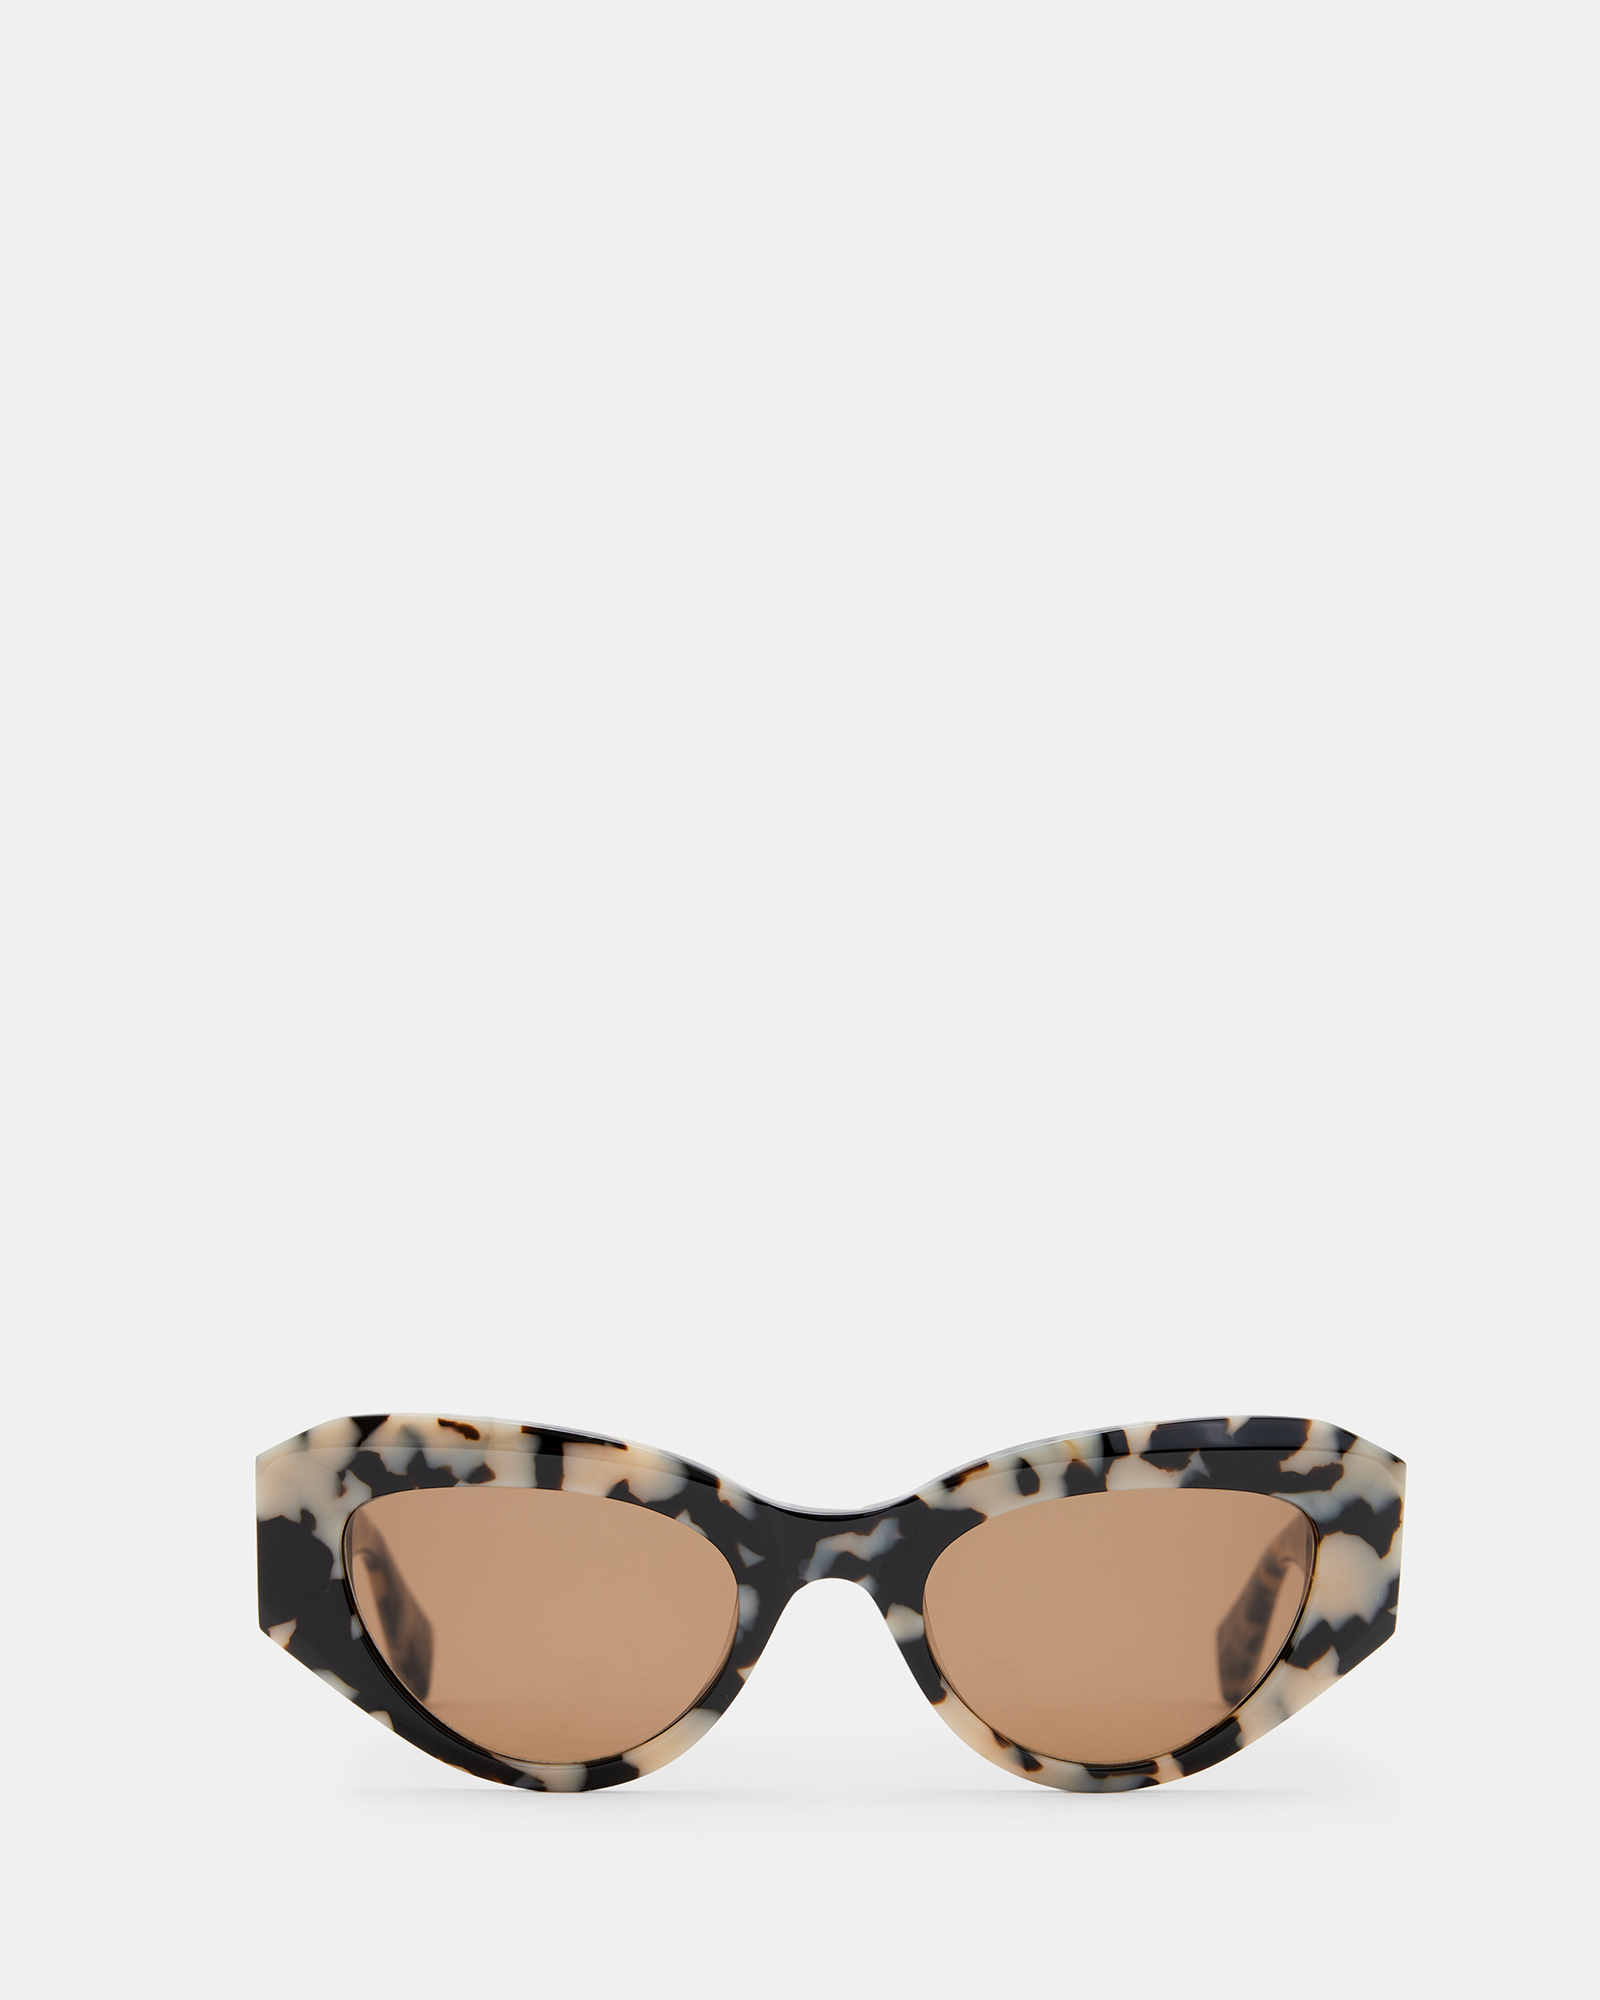 AllSaints Calypso Bevelled Cat Eye Sunglasses,, SNOW LEOPARD, Size: One Size